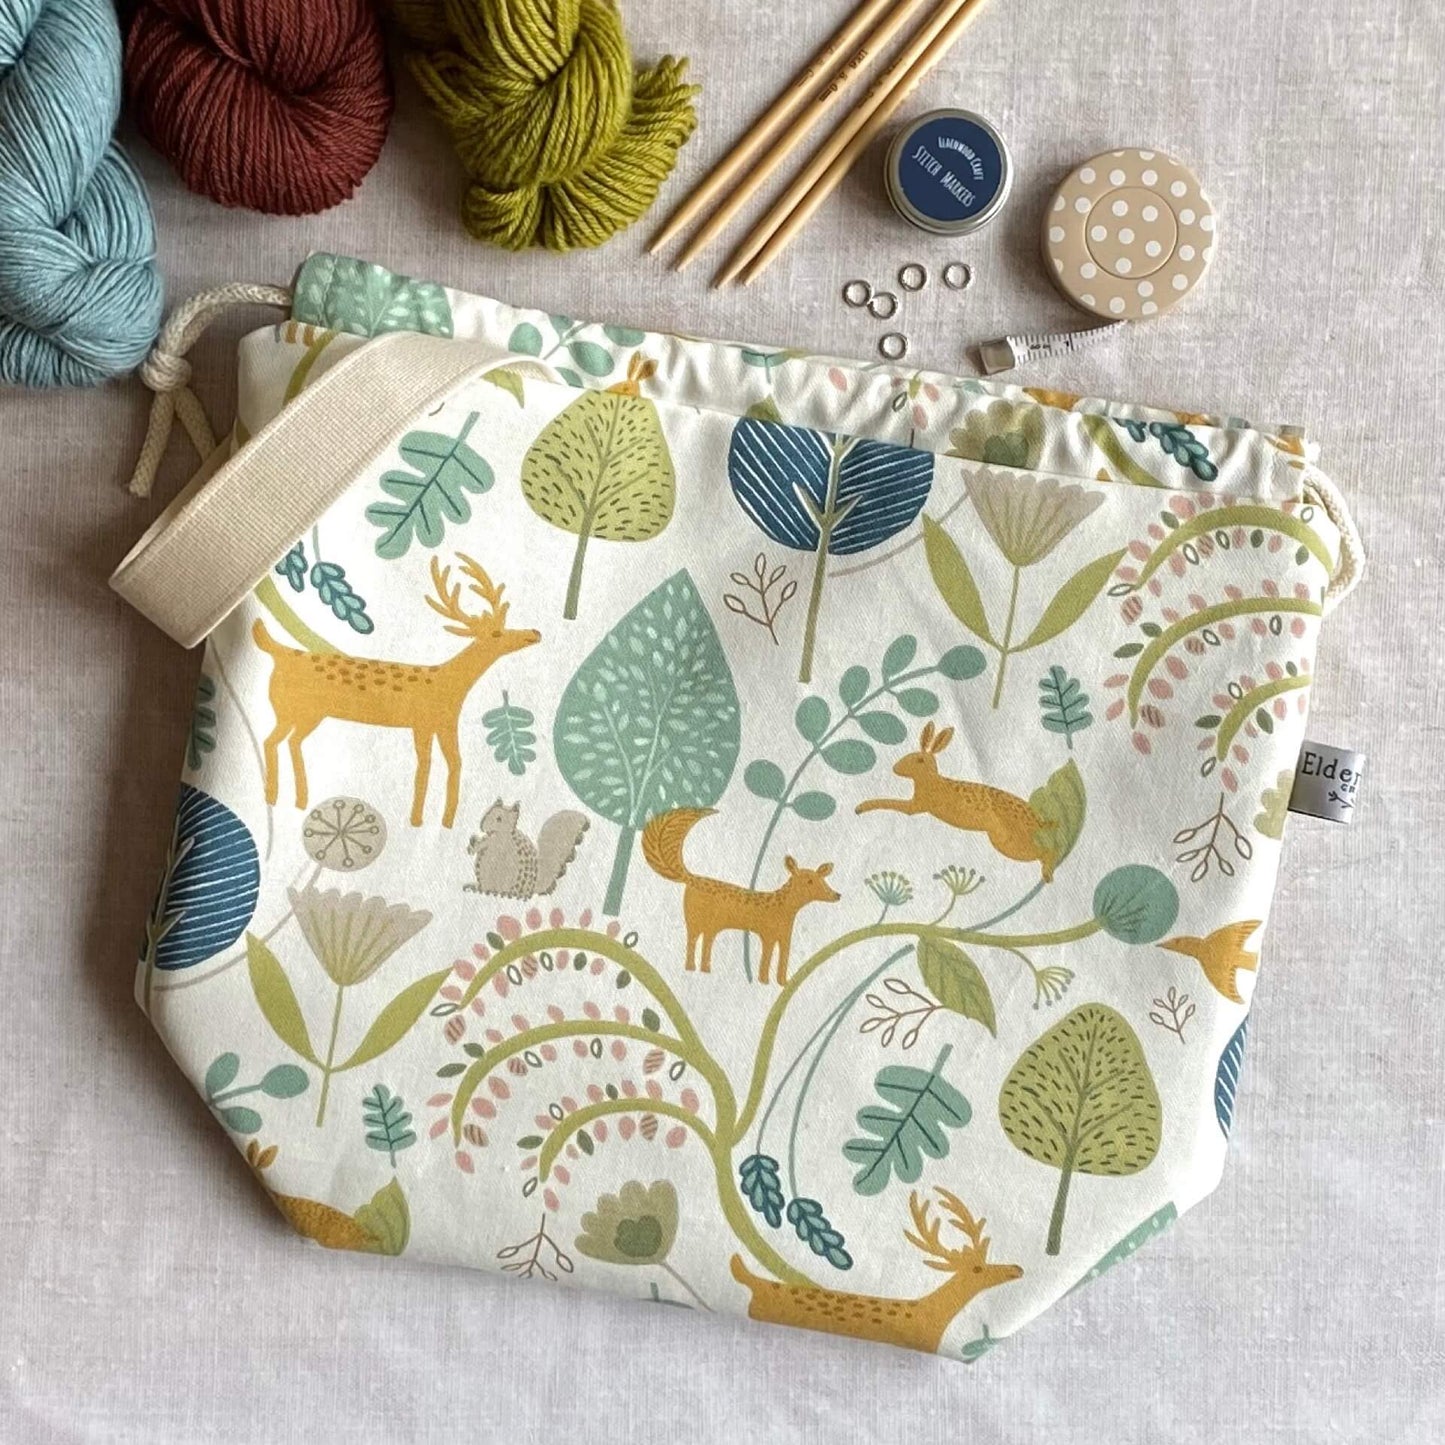 Woodland knitting project bag handmade by Eldewnwood Craft